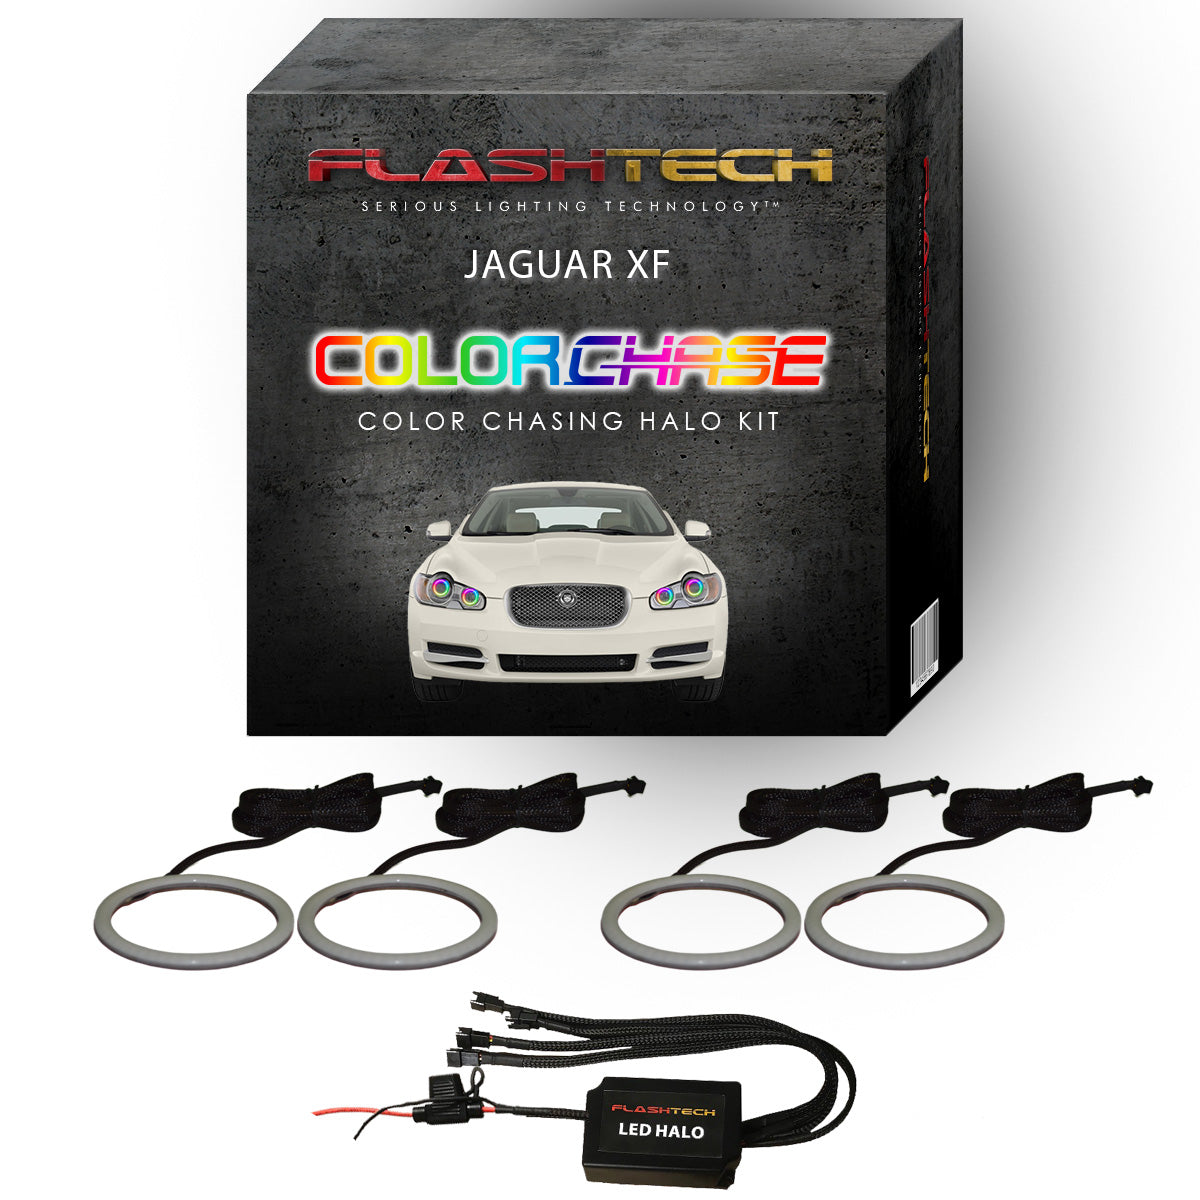 Jaguar XF ColorChase LED Halo Headlight Kit 2009-2011